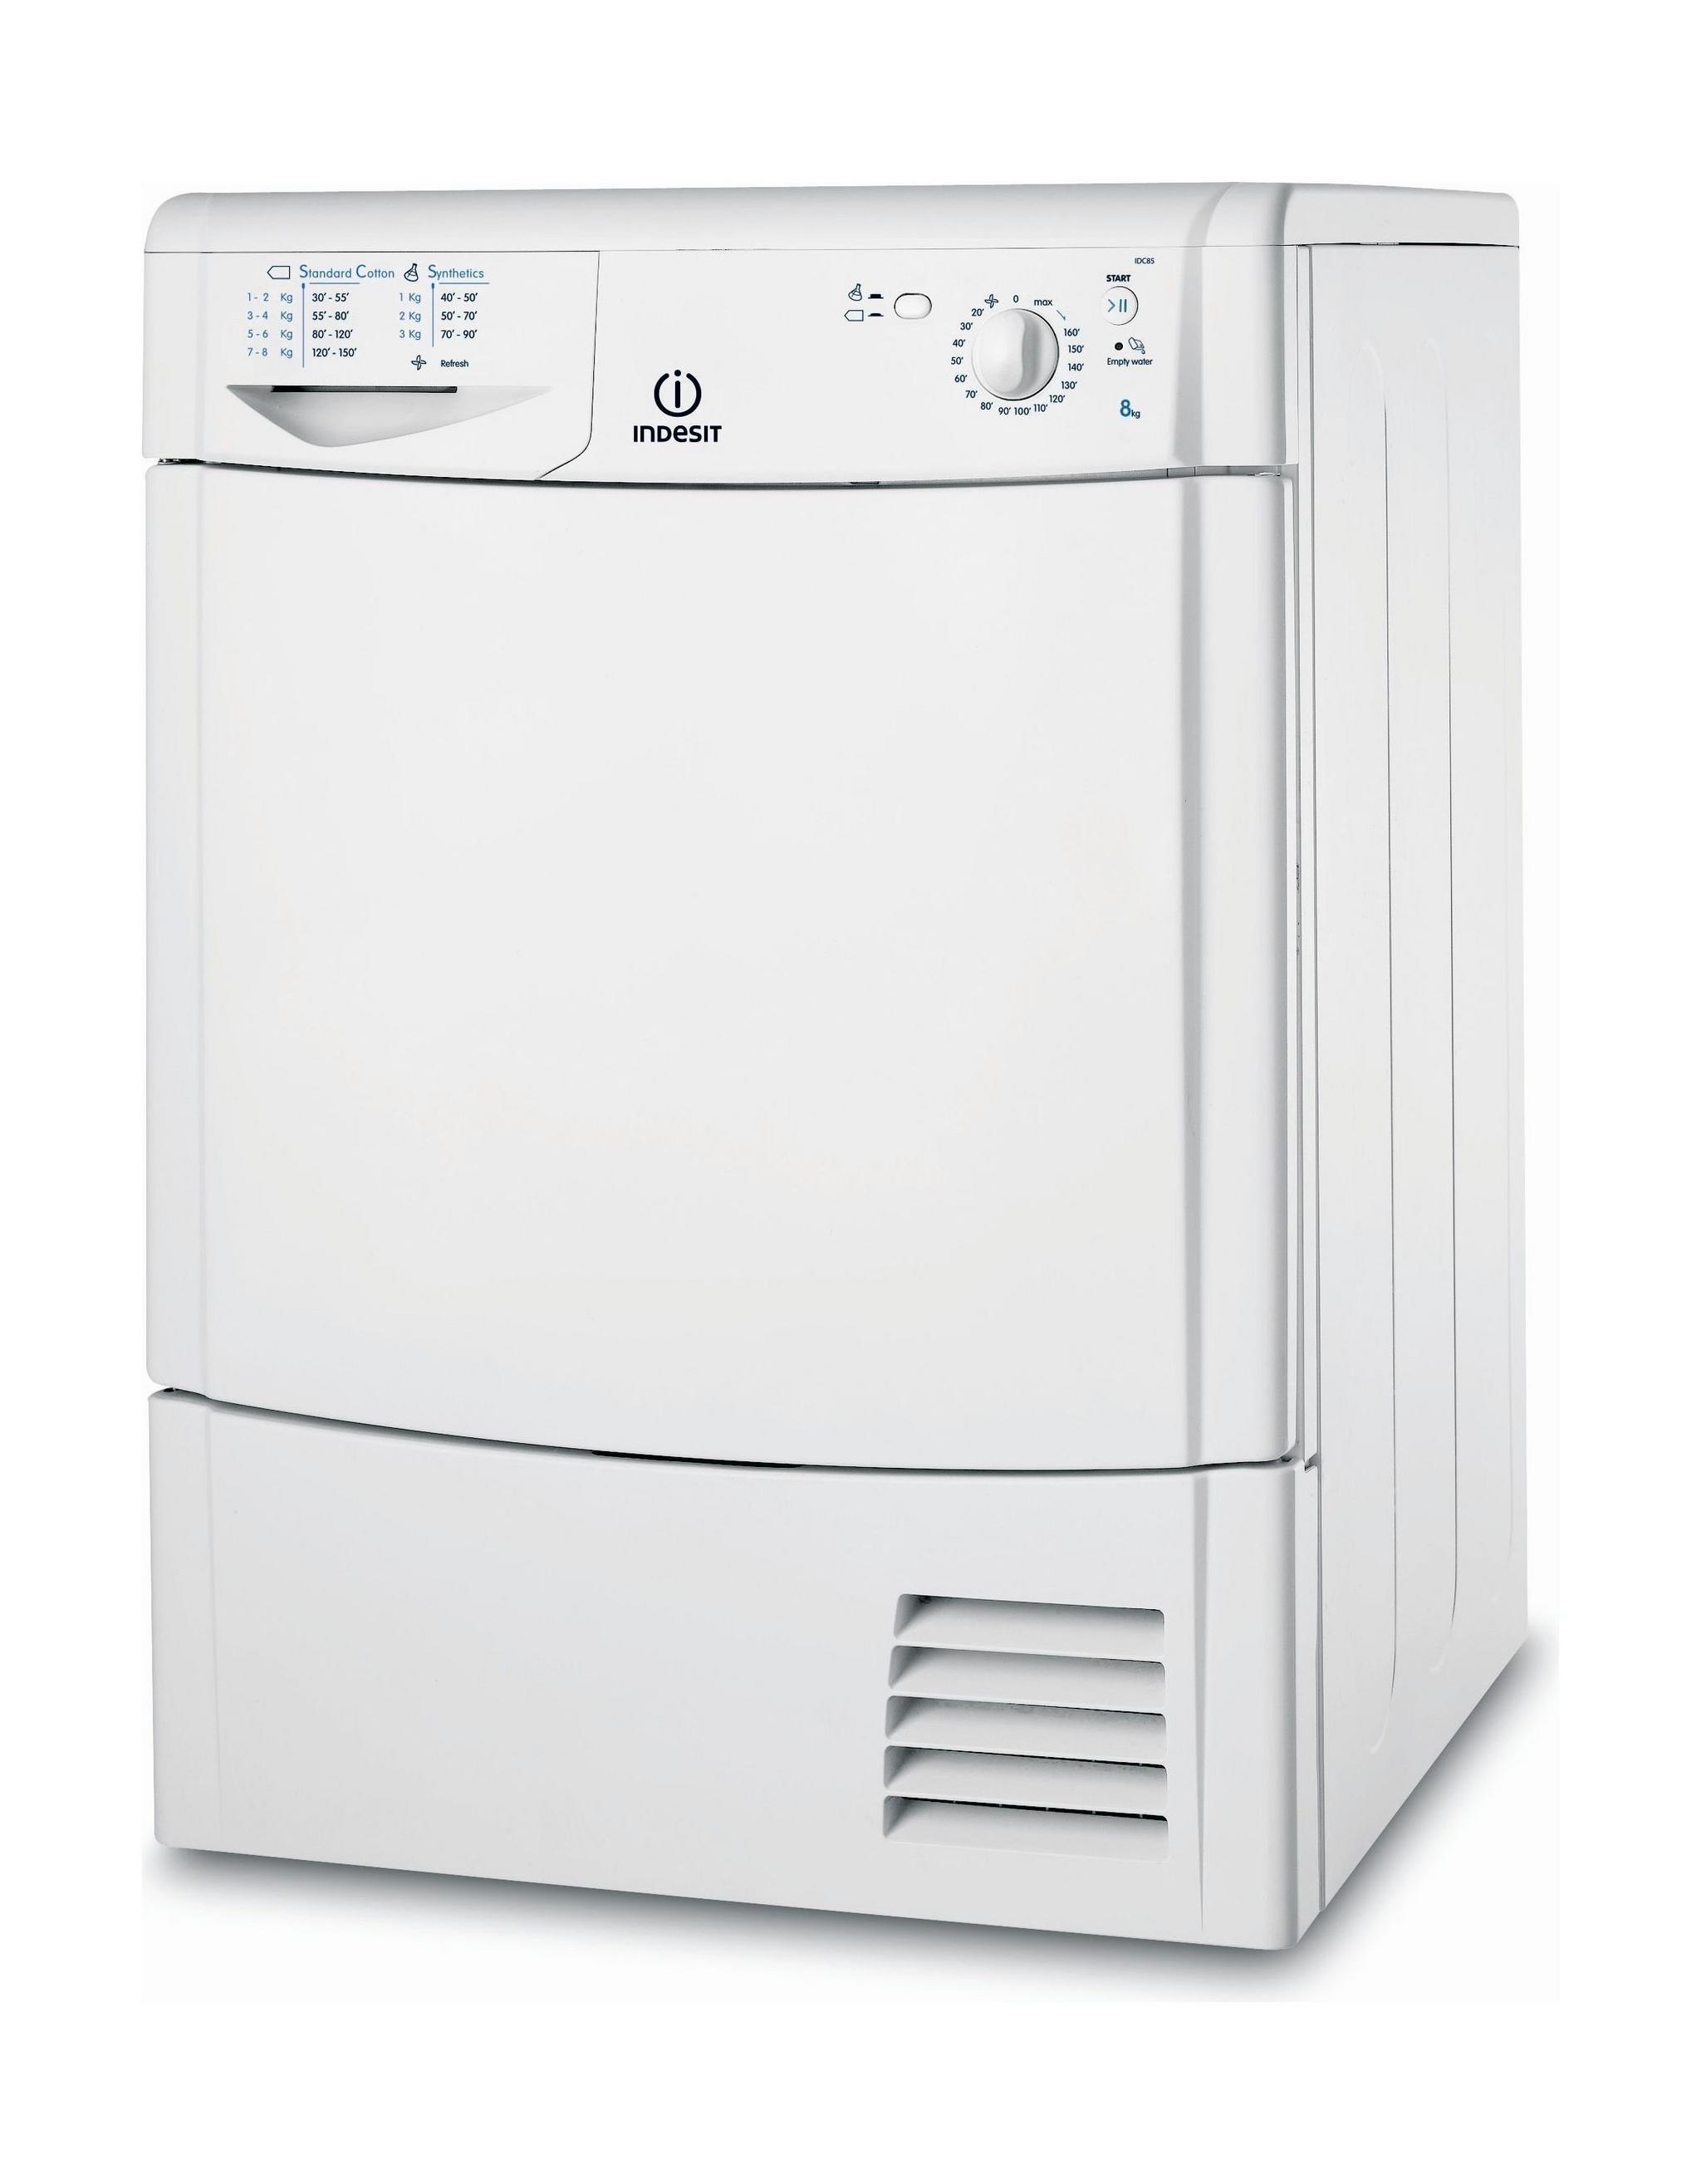 Indesit 8kg 1400RPM Ecotime Front Loading Washing Machine + Indesit 8kg Condenser Dryer  + Wansa Washer and Dryer Stacking Unit